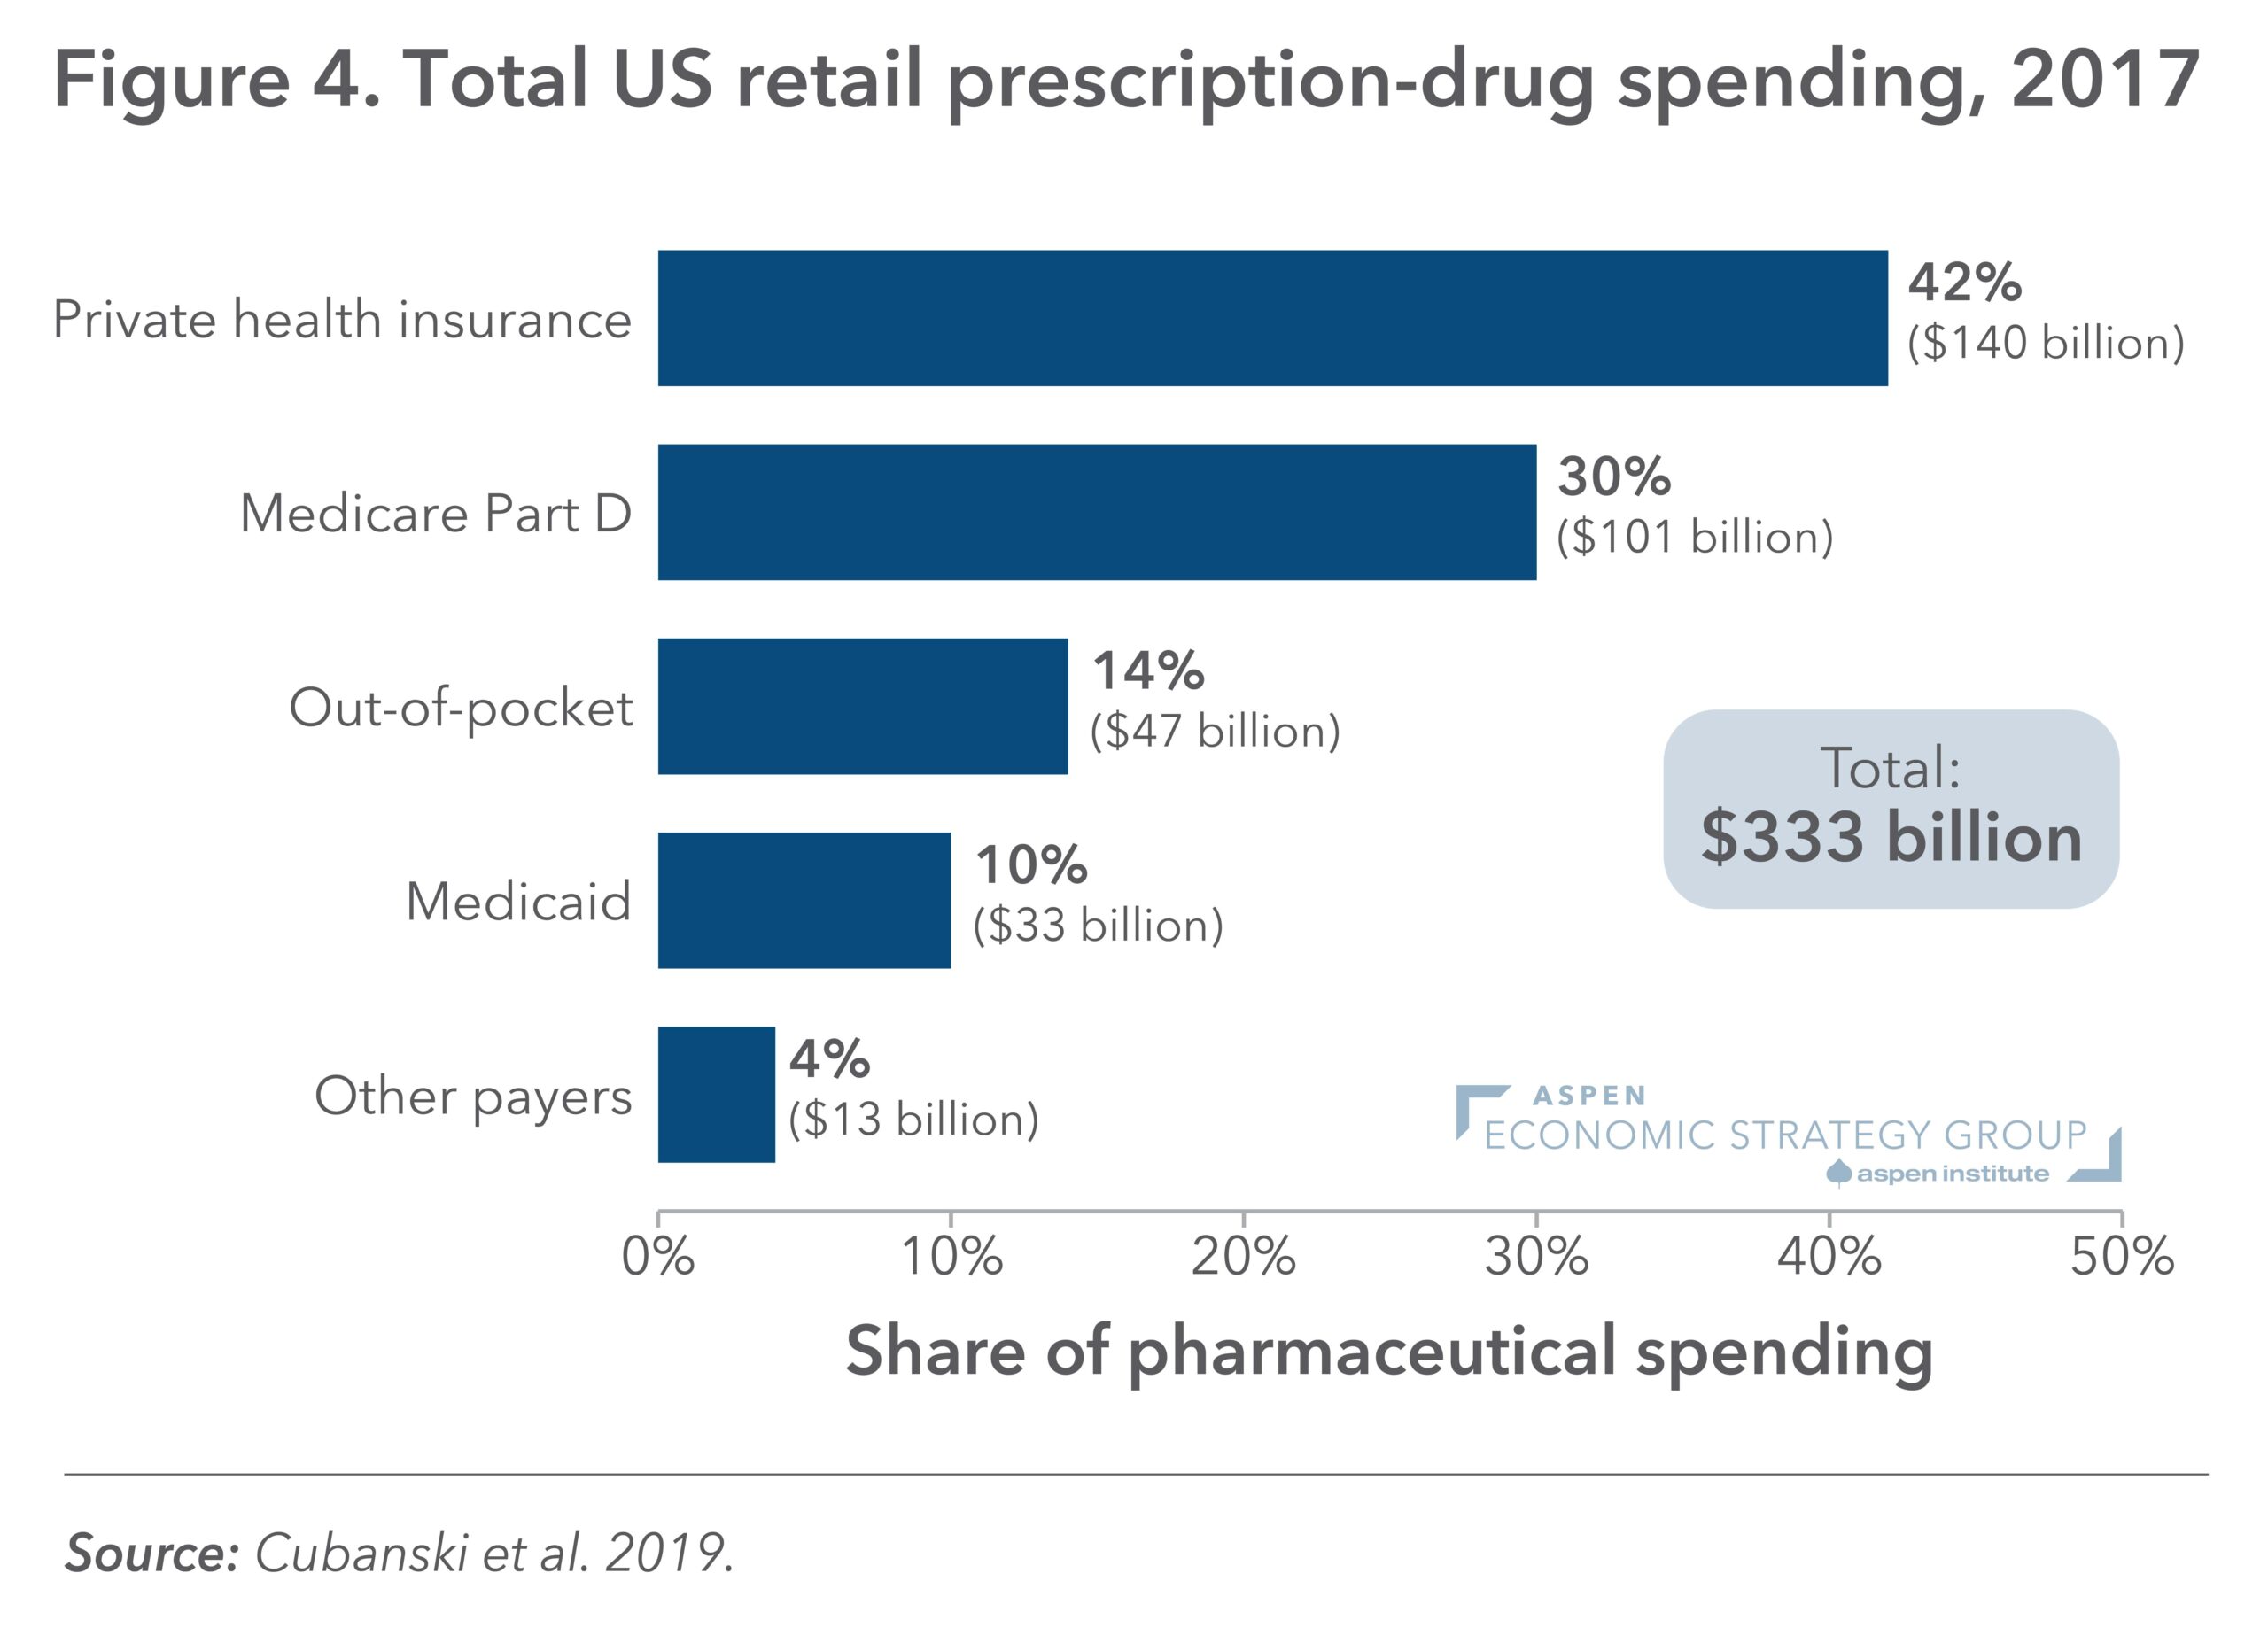 Figure 4: Total US Retail Prescription-Drug Spending, 2017